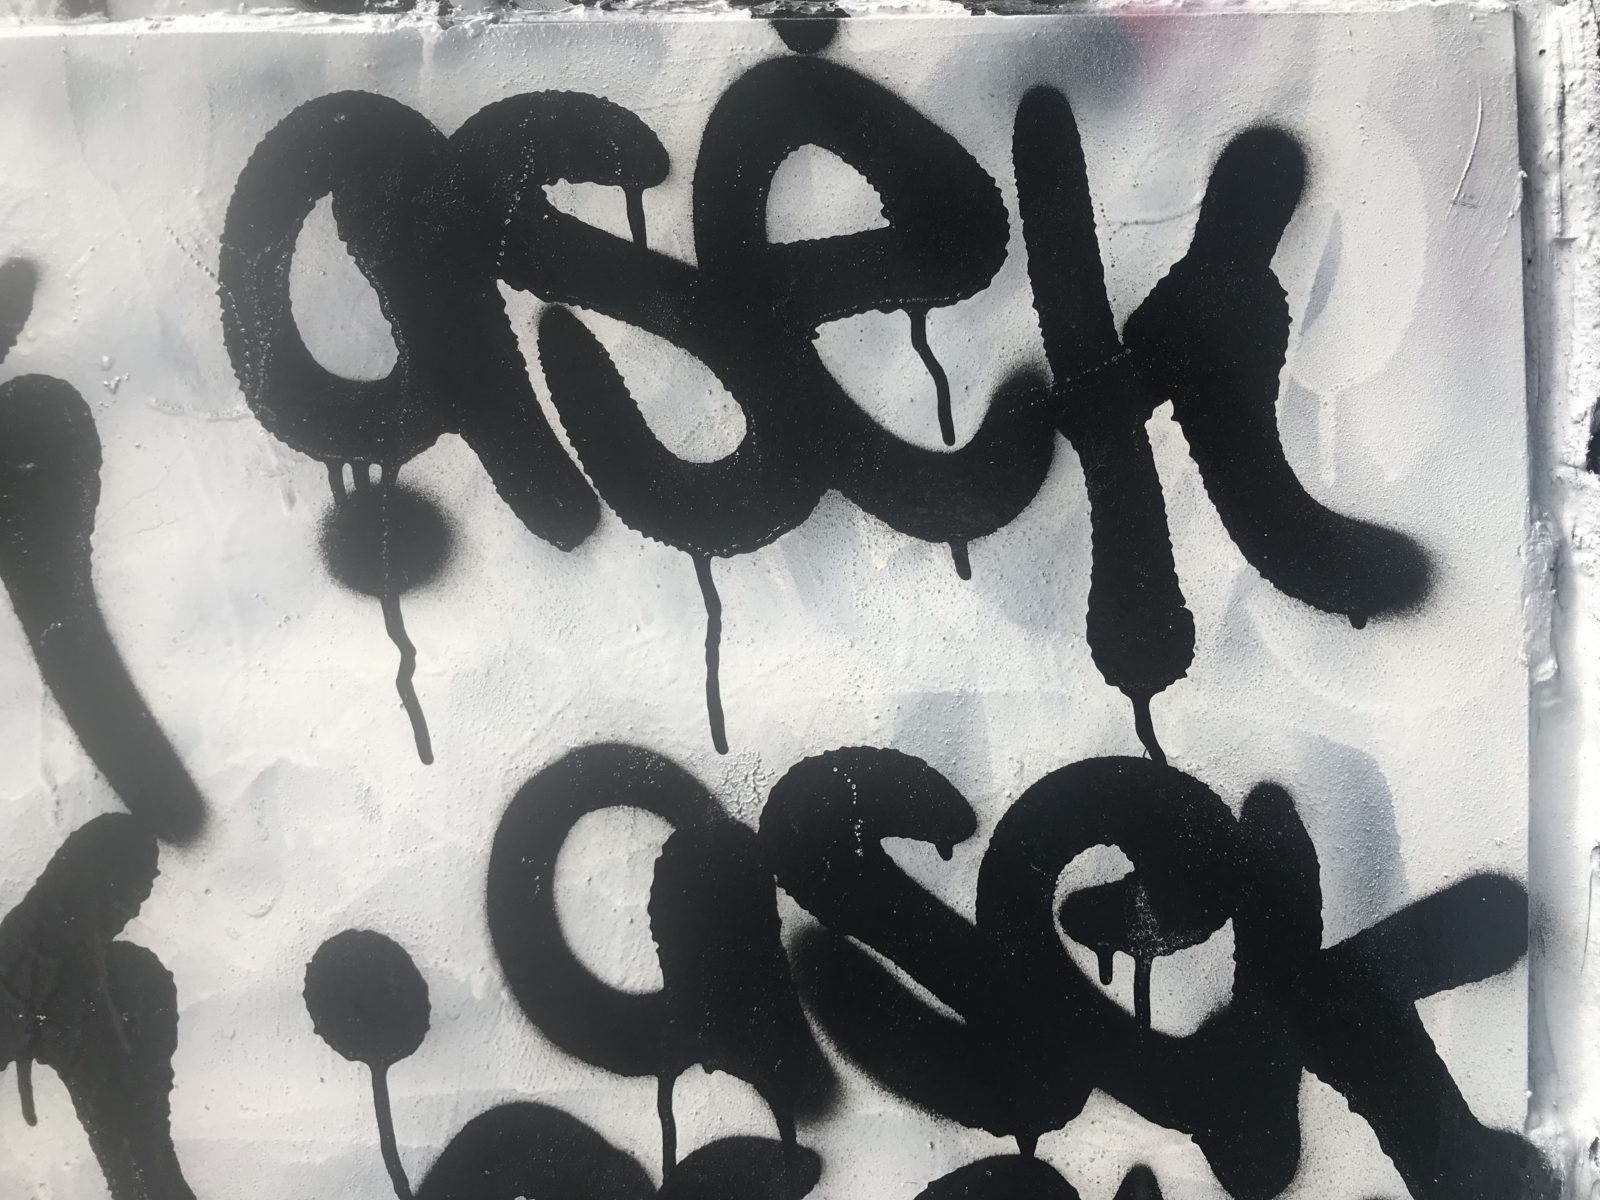 assault graffiti in dc